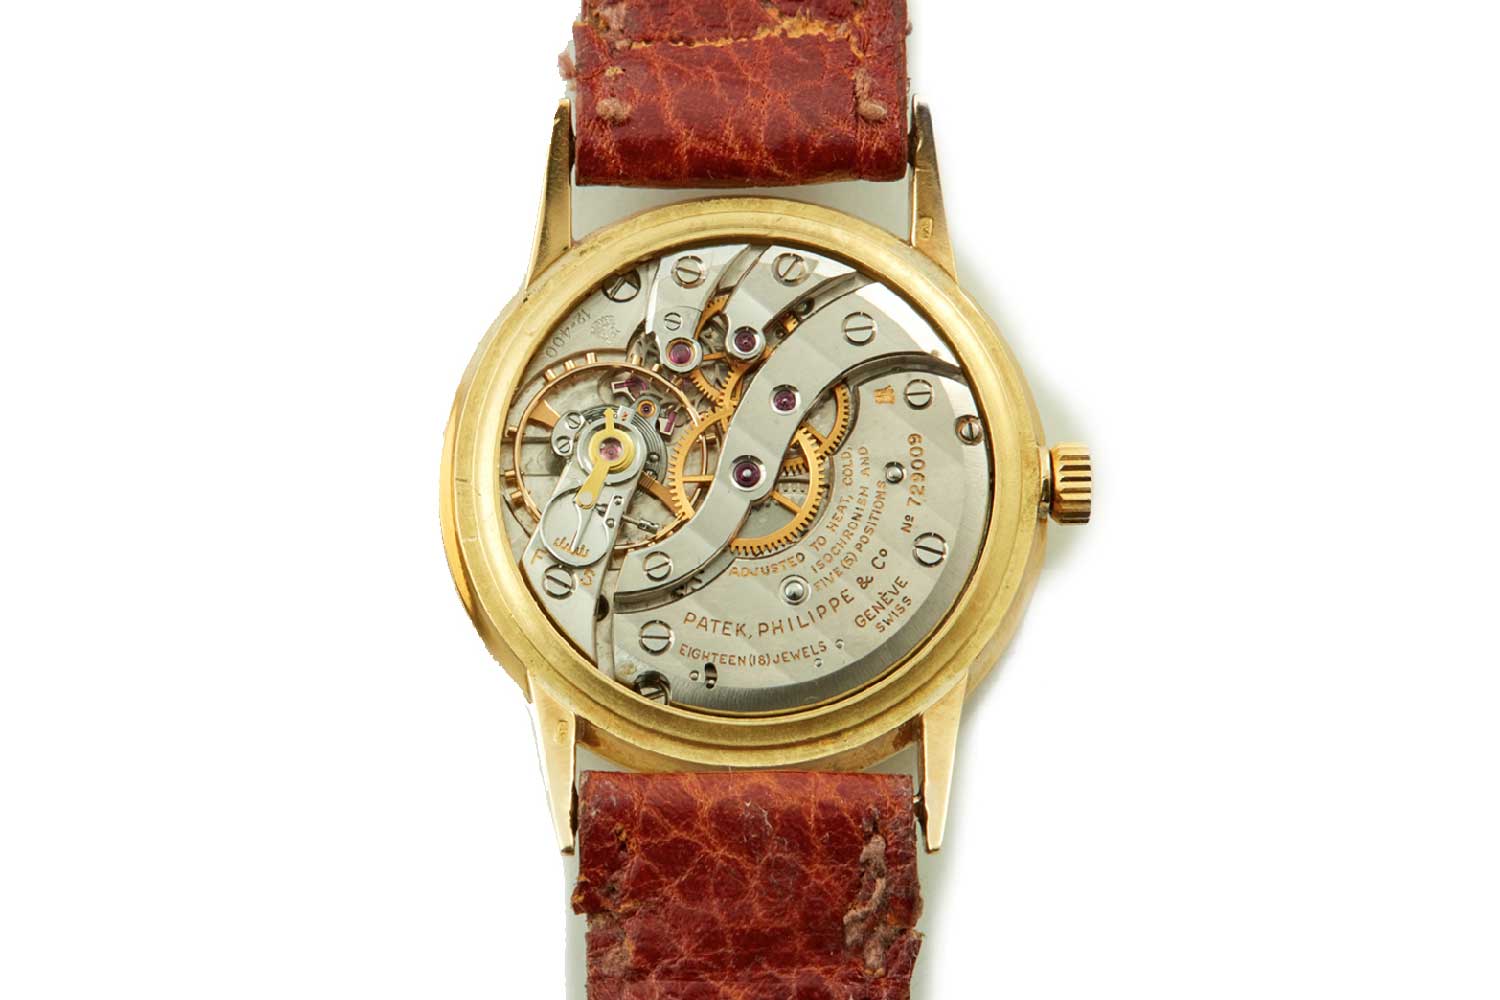 The Patek Philippe calibre 12-400 (Image: Vintage Gold Watches London)